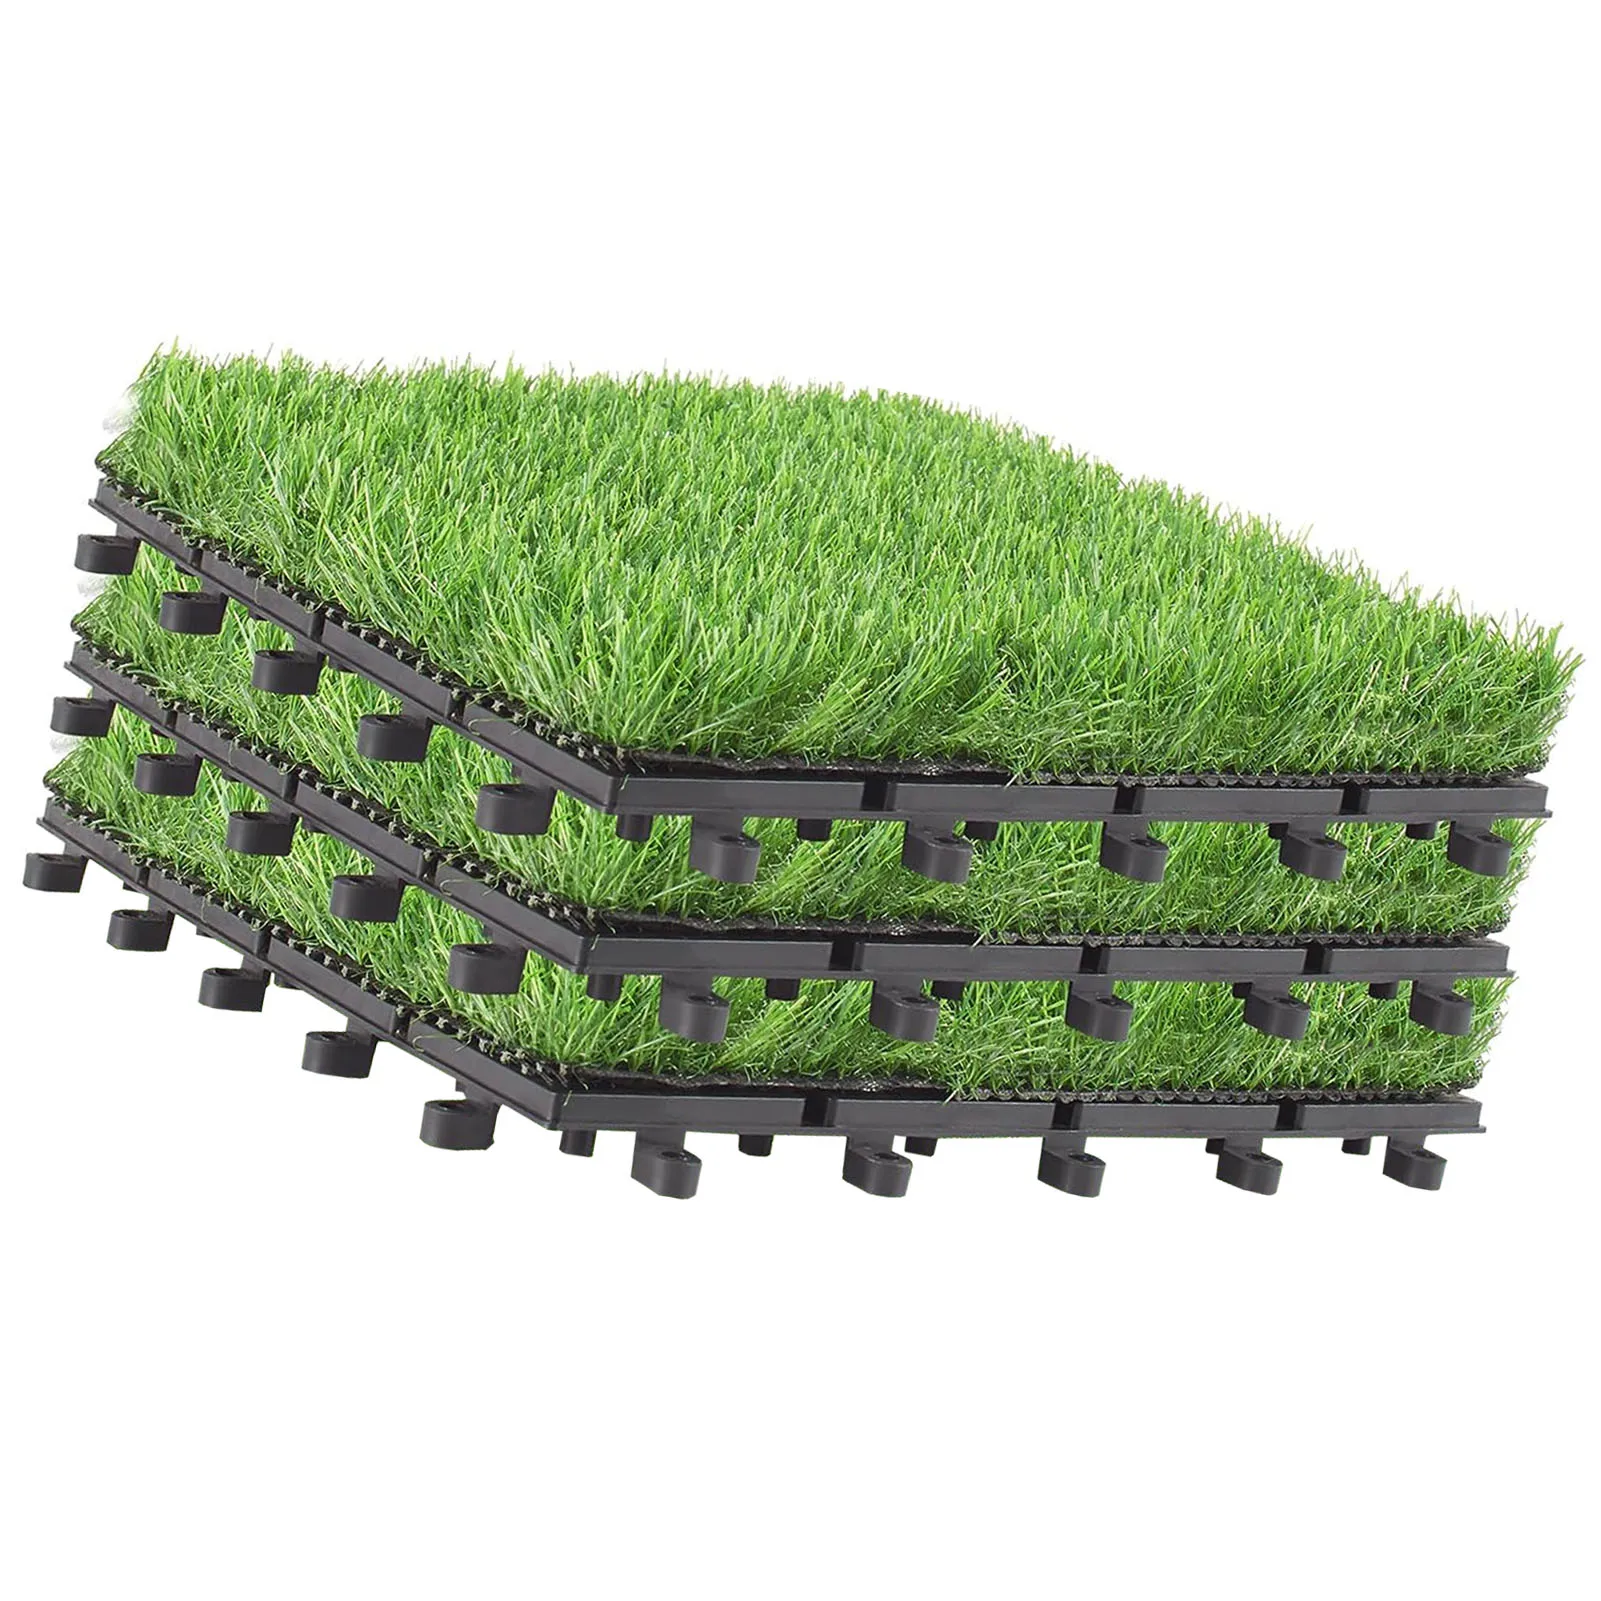 

3 Pcs Garden Artificial Grass Tiles Easy Installation Long Lasting Fake Turf for Landscaping Deck Backyard xobw